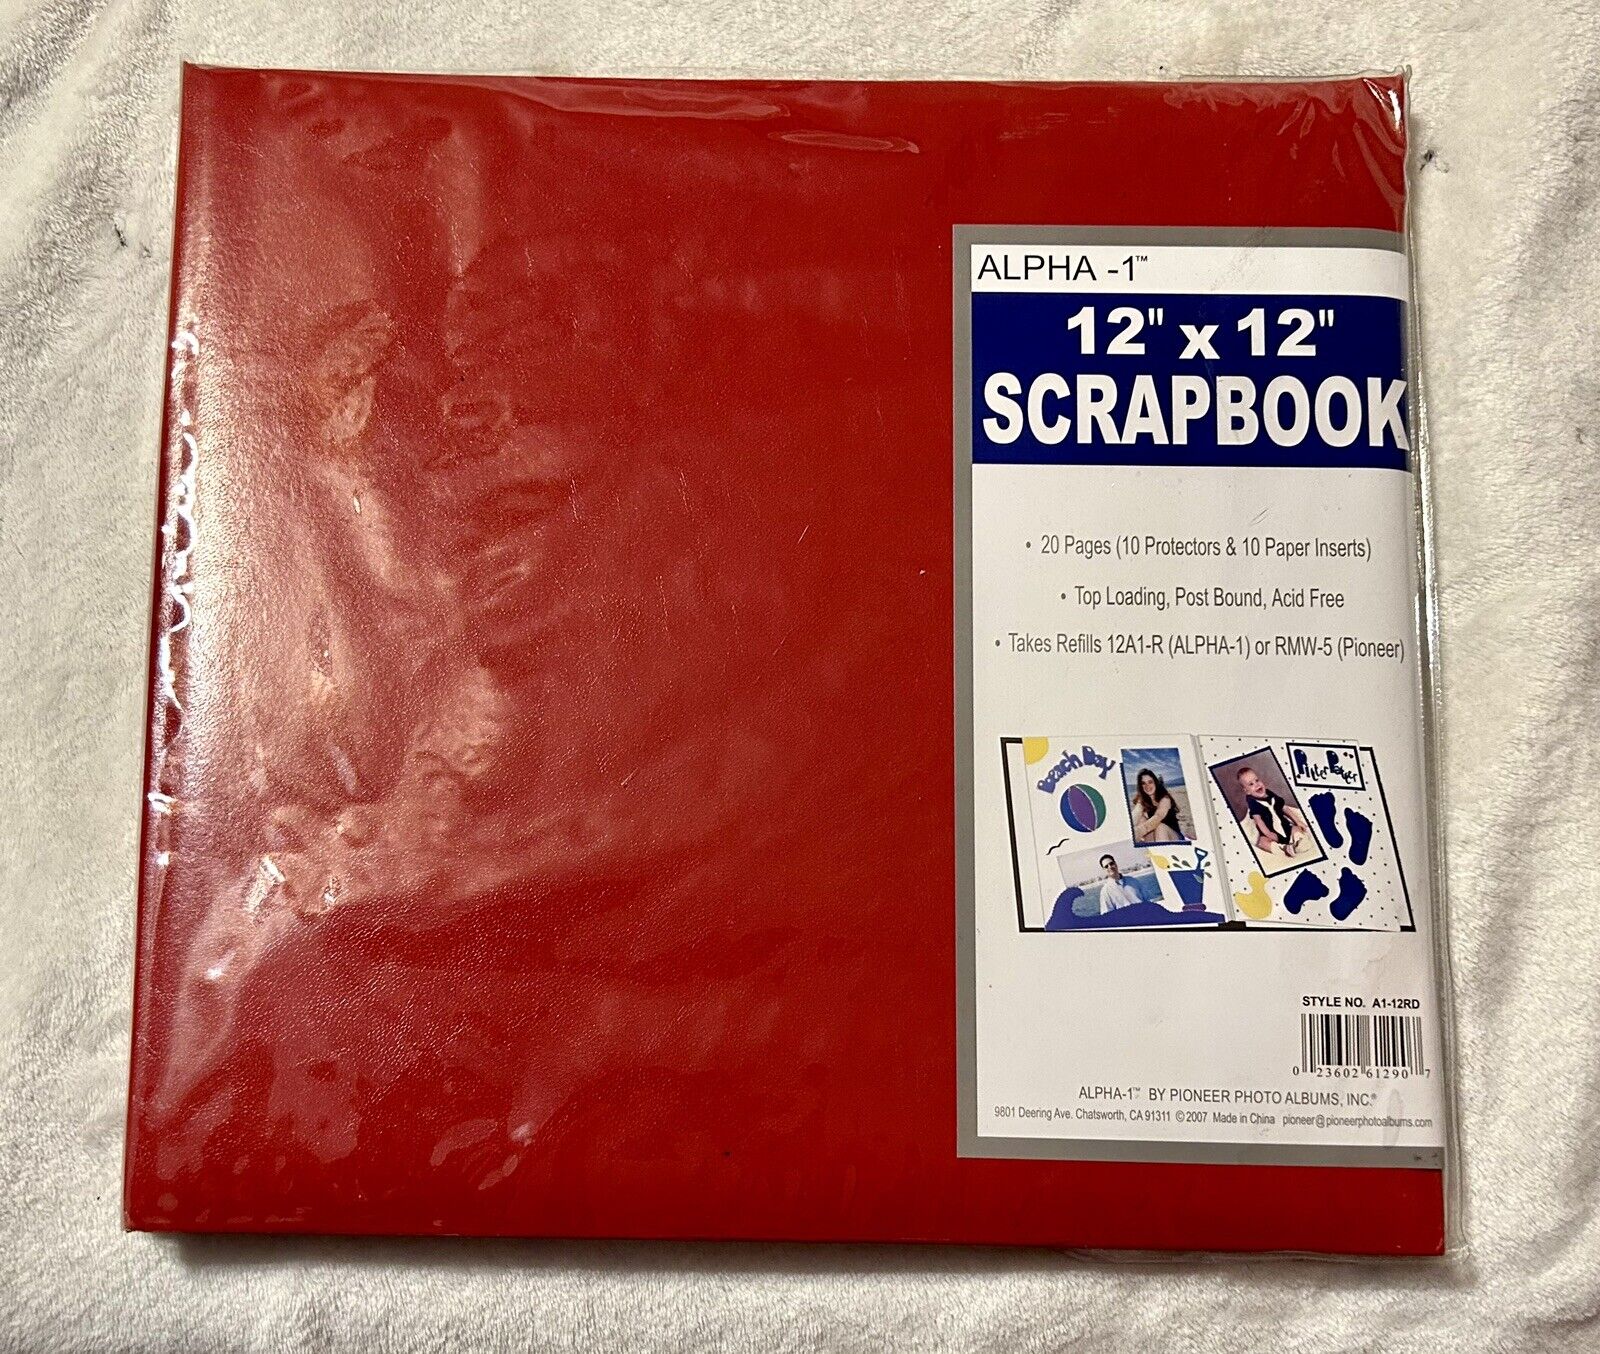 New Xtra Large Scrapbook 12”x 12” Без бренда